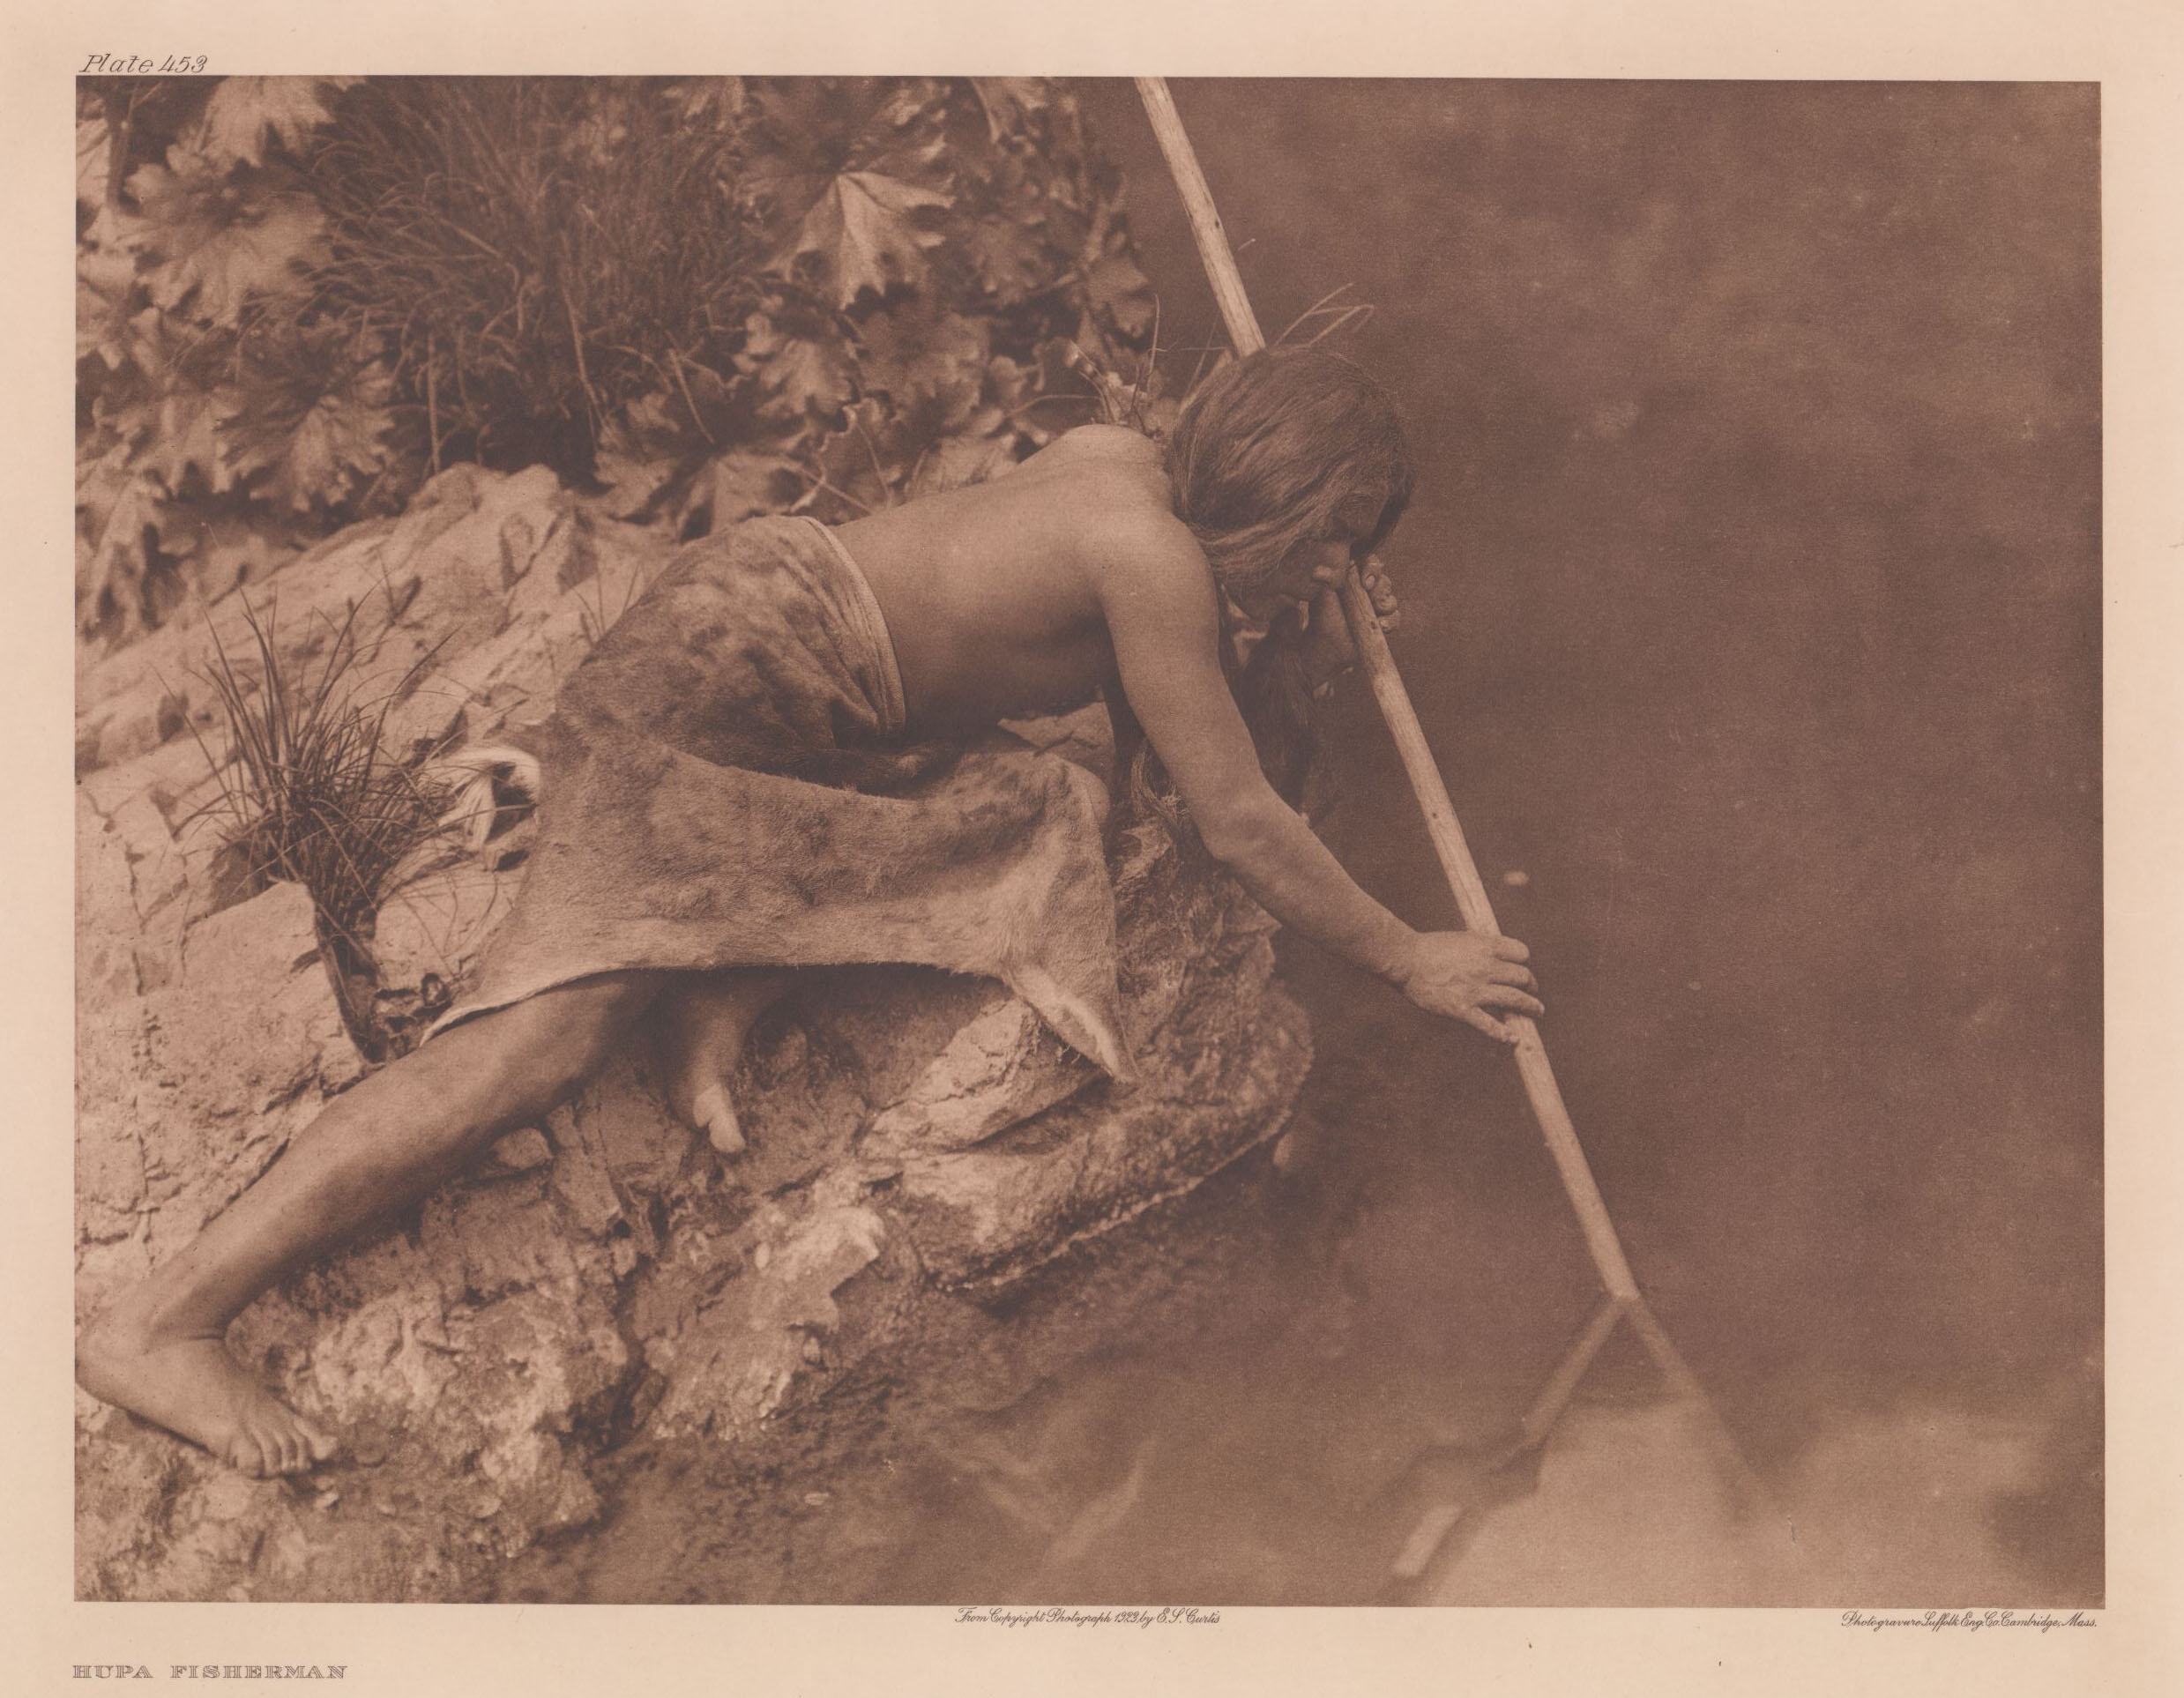 Edward Curtis Photogravure [Hupa Fisherman]